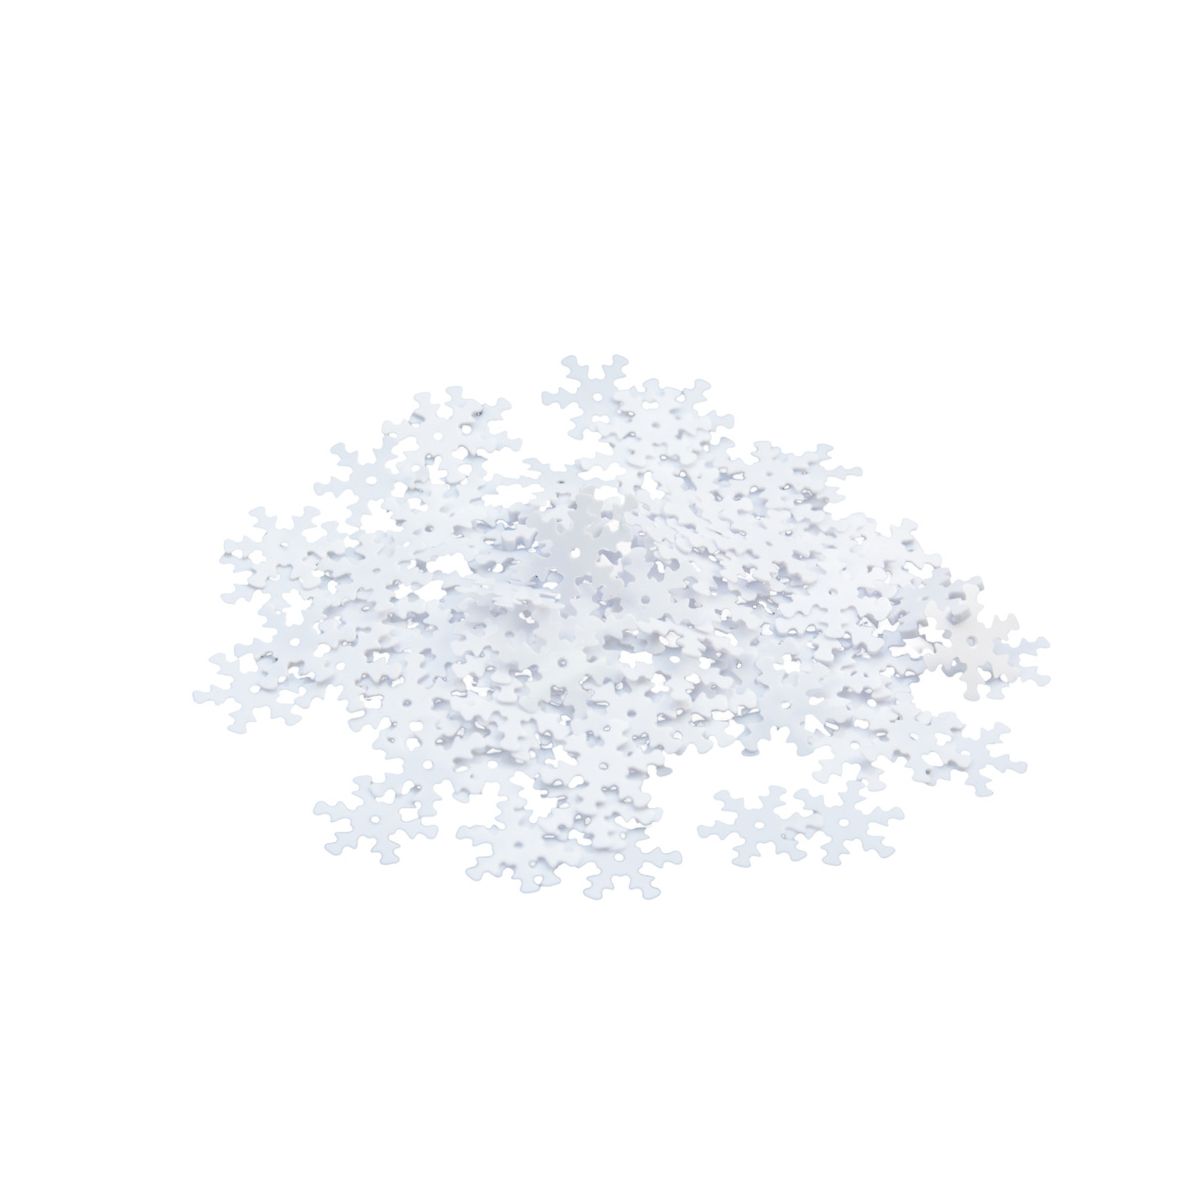 Konfetti gwiazdki białe 15g Arpex (BN4741)